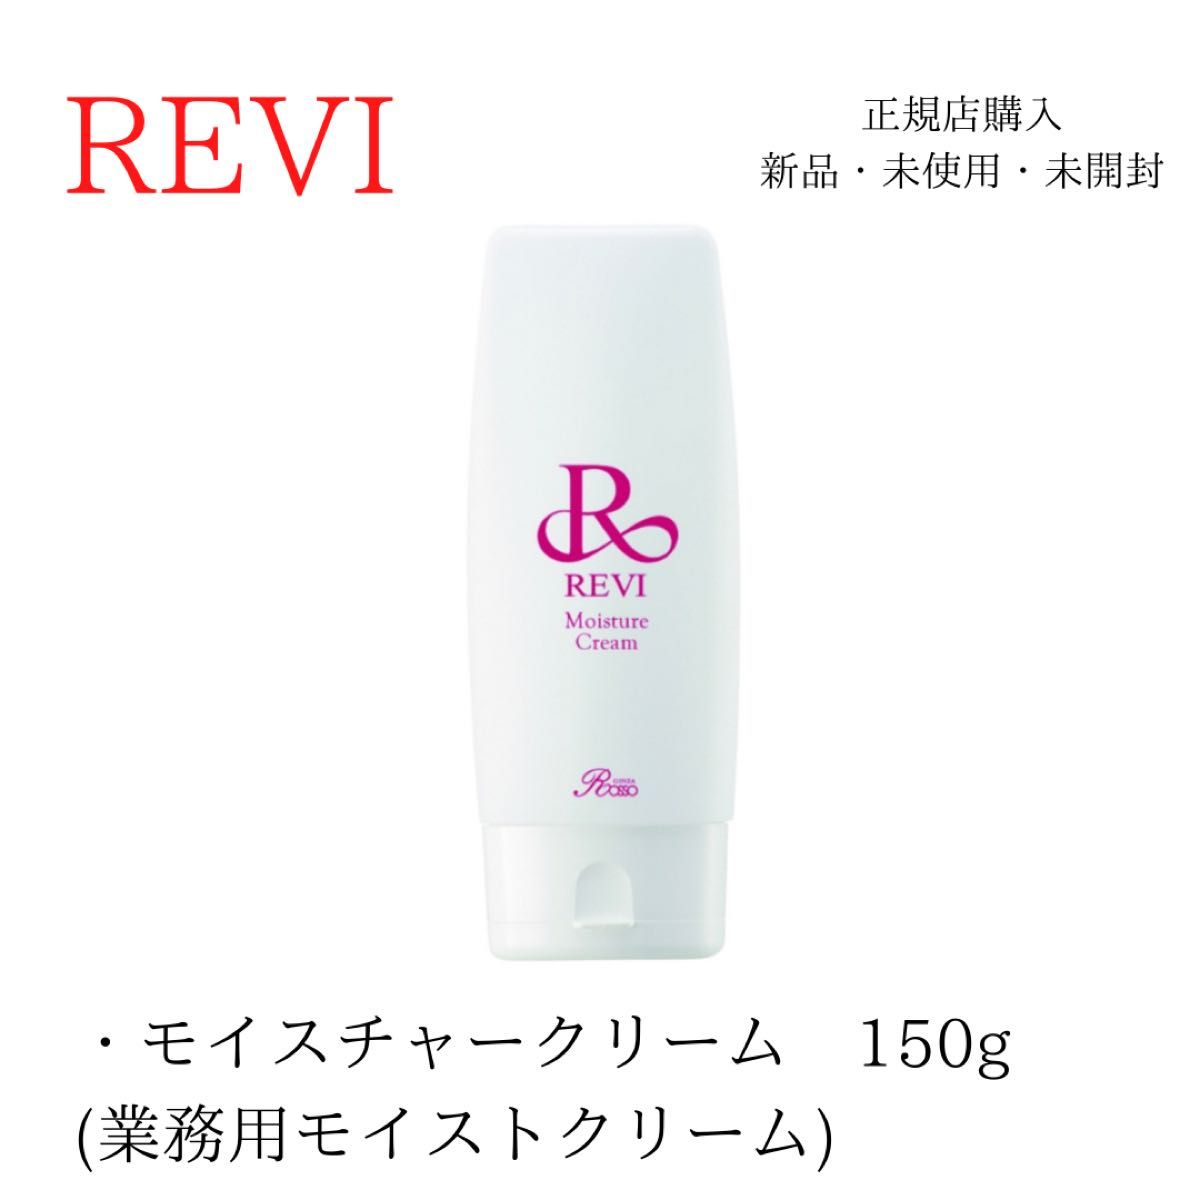 REVI 業務用モイスチャークリーム 150g - 基礎化粧品